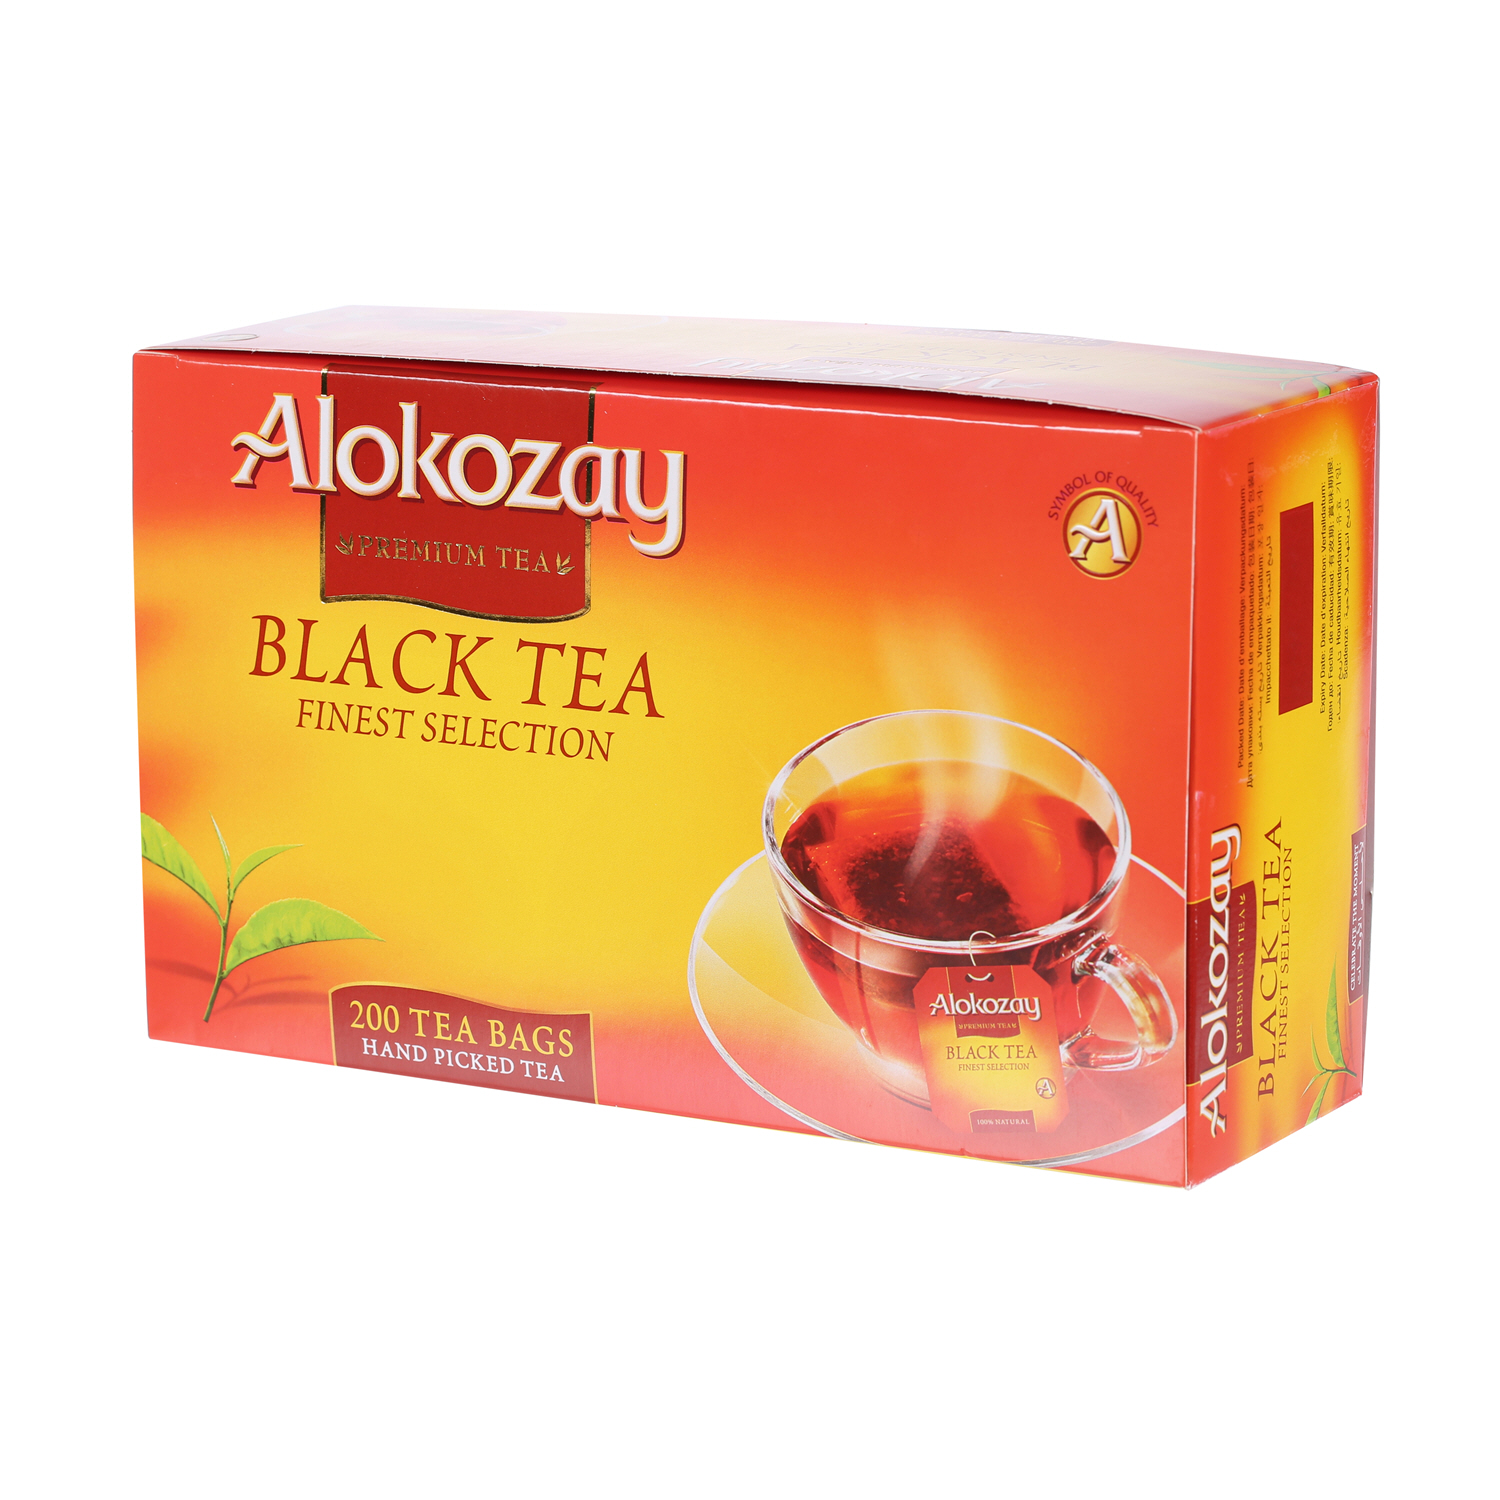 Alokozay Black Tea Bag 200 Pack